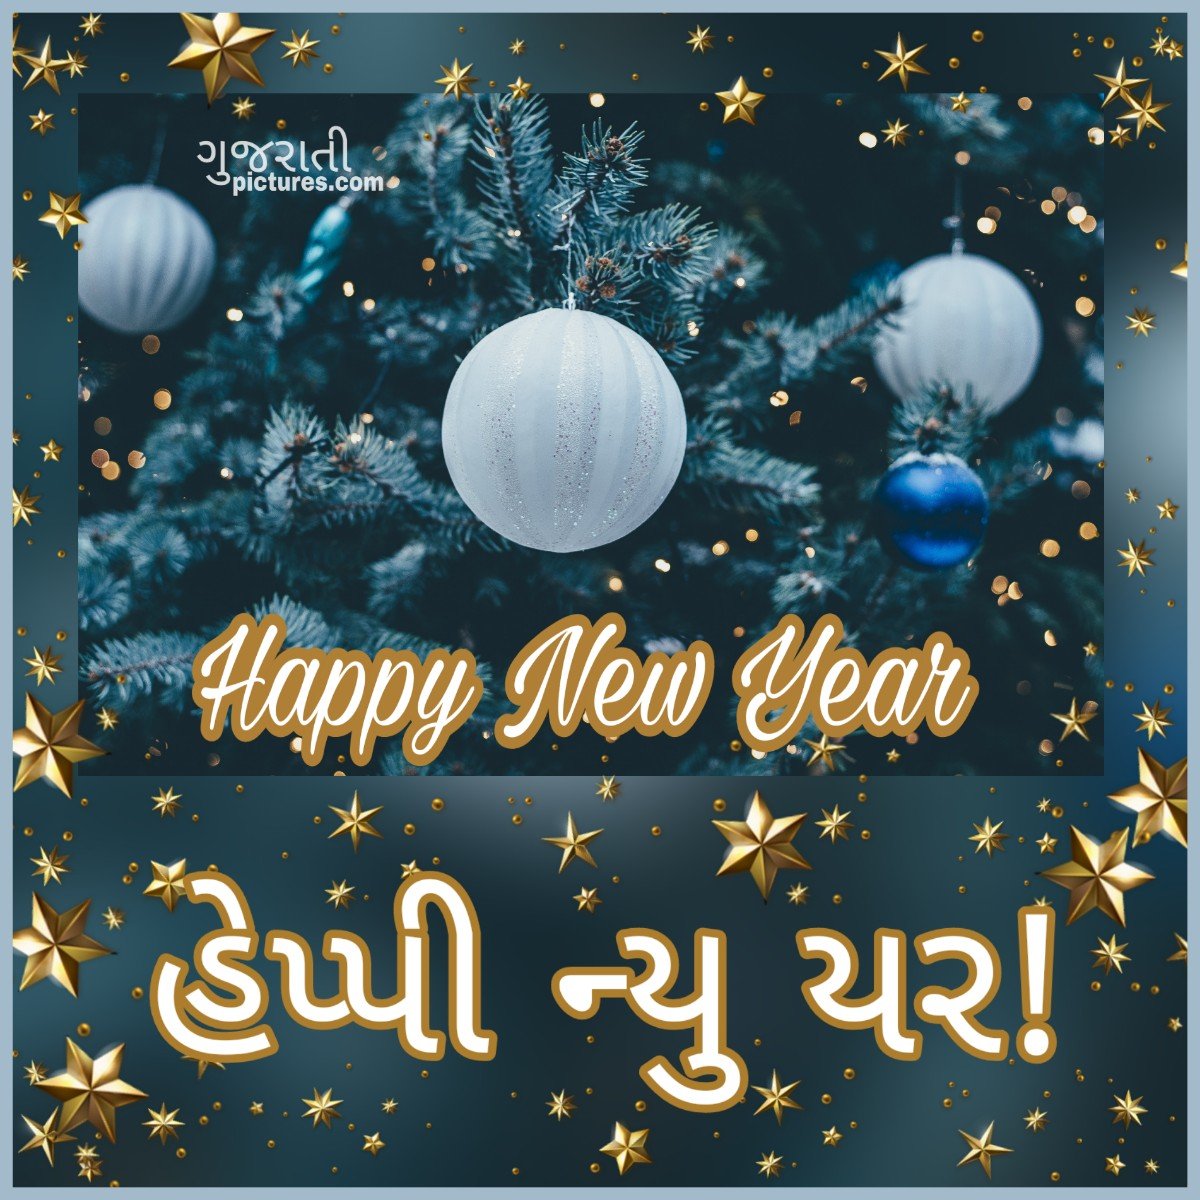 Happy New Year Gujarati Photo Gujarati Pictures Website Dedicated